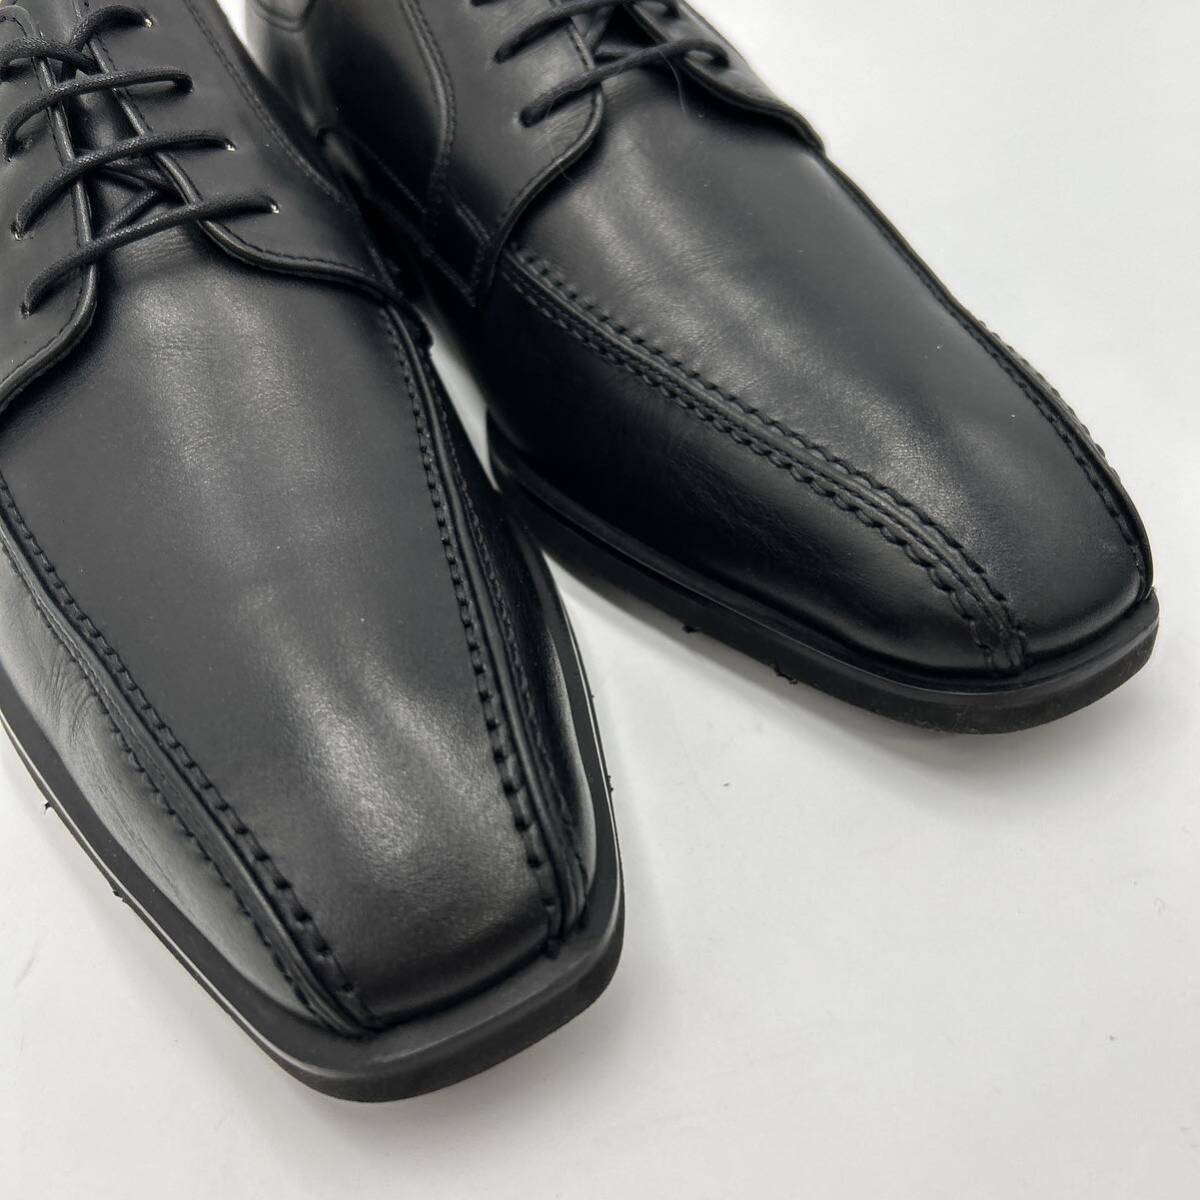 C ■ 日本製 '履き心地抜群' REGAL リーガル LEATHER ビジネスシューズ 革靴 25cm EEE 洗礼されたデザイン 紳士靴 BLACK 外羽根式 黒_画像3